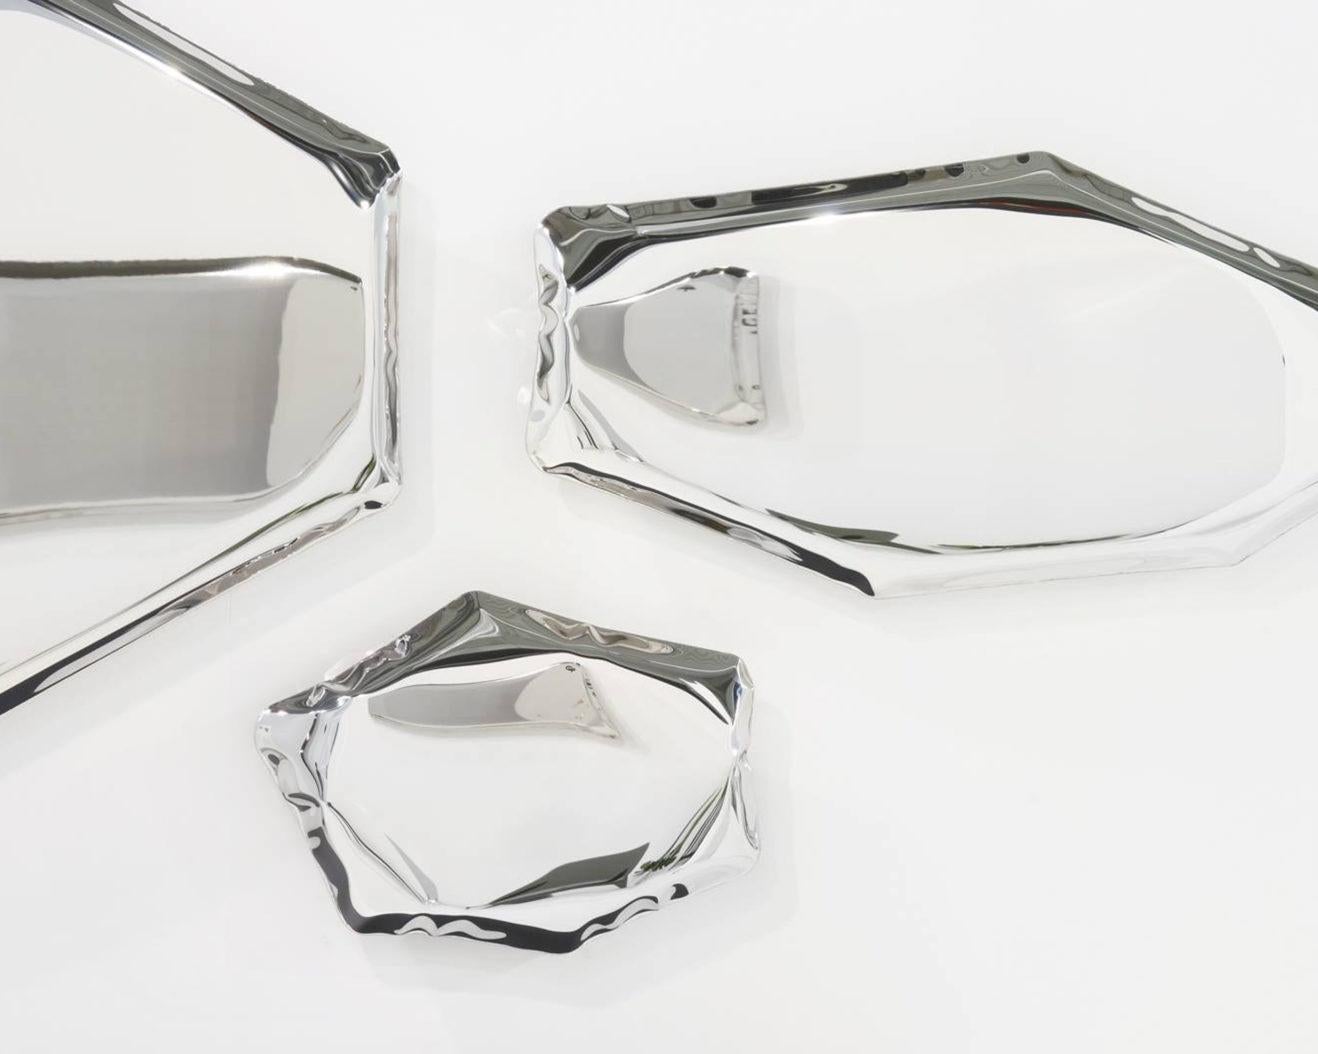 Polish Tafla Mirror Q3 by Zieta Prozessdesign in Stainless Steel